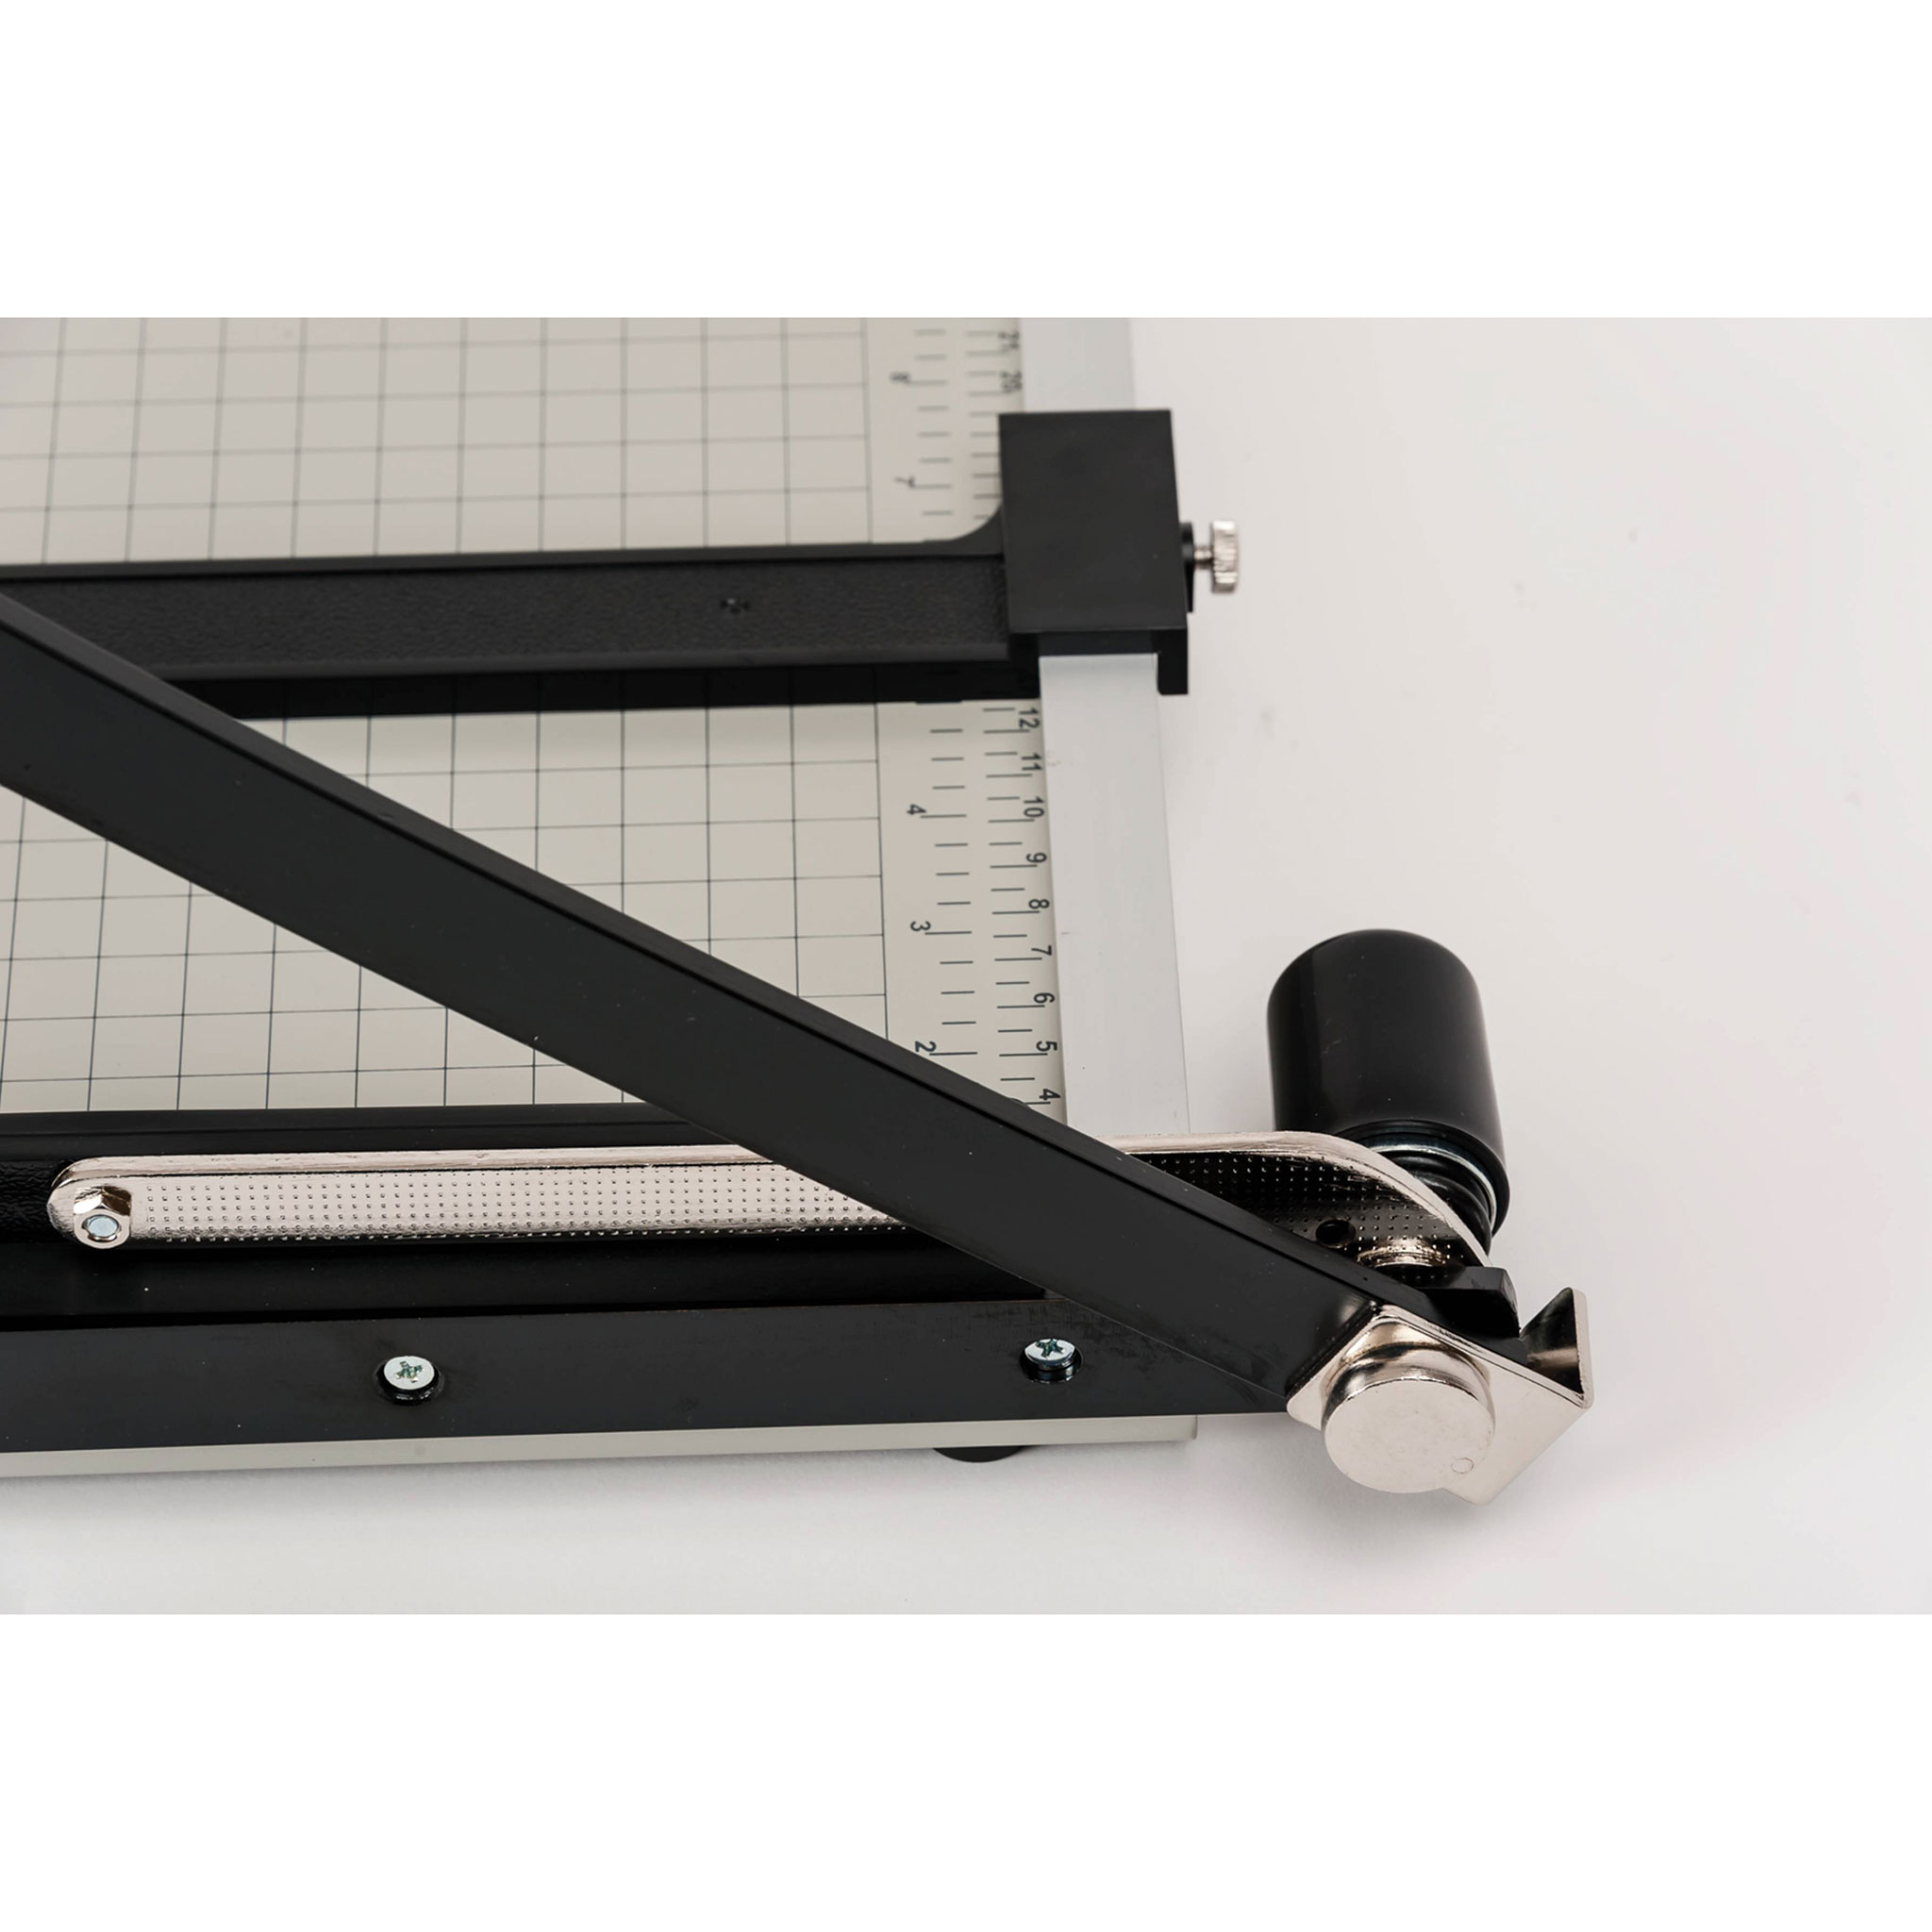 Dahle Vantage 18e Paper Trimmer, 18 Cut, 15 Sheet Max, Metal Base  w/Adjustable Guide, Paper Cutter 